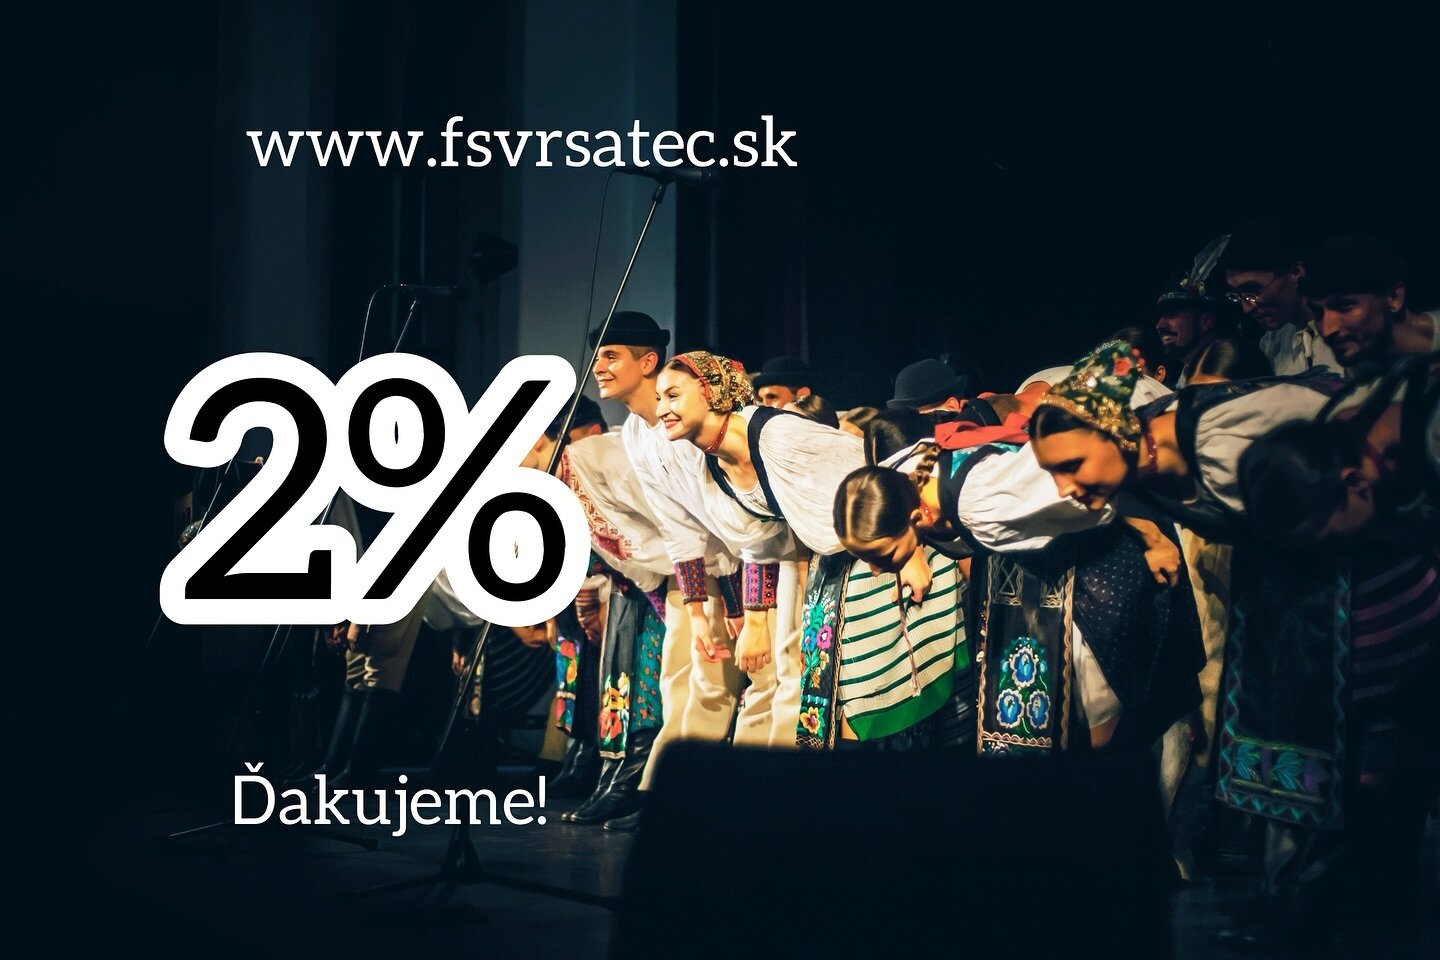 Ďakujeme za Va&scaron;e 2% 🩵➡️ link v bio
#fsvrsatec #vrsatec #kroj #kroje #slovakfolklore #folklore #nasfolklor #dance #dancing #tanec #ludovytanec #dubnica #mestodubnica #dubnicanadvahom #trencin #ilava #muzikant #2% #dane #dar #performance #slova